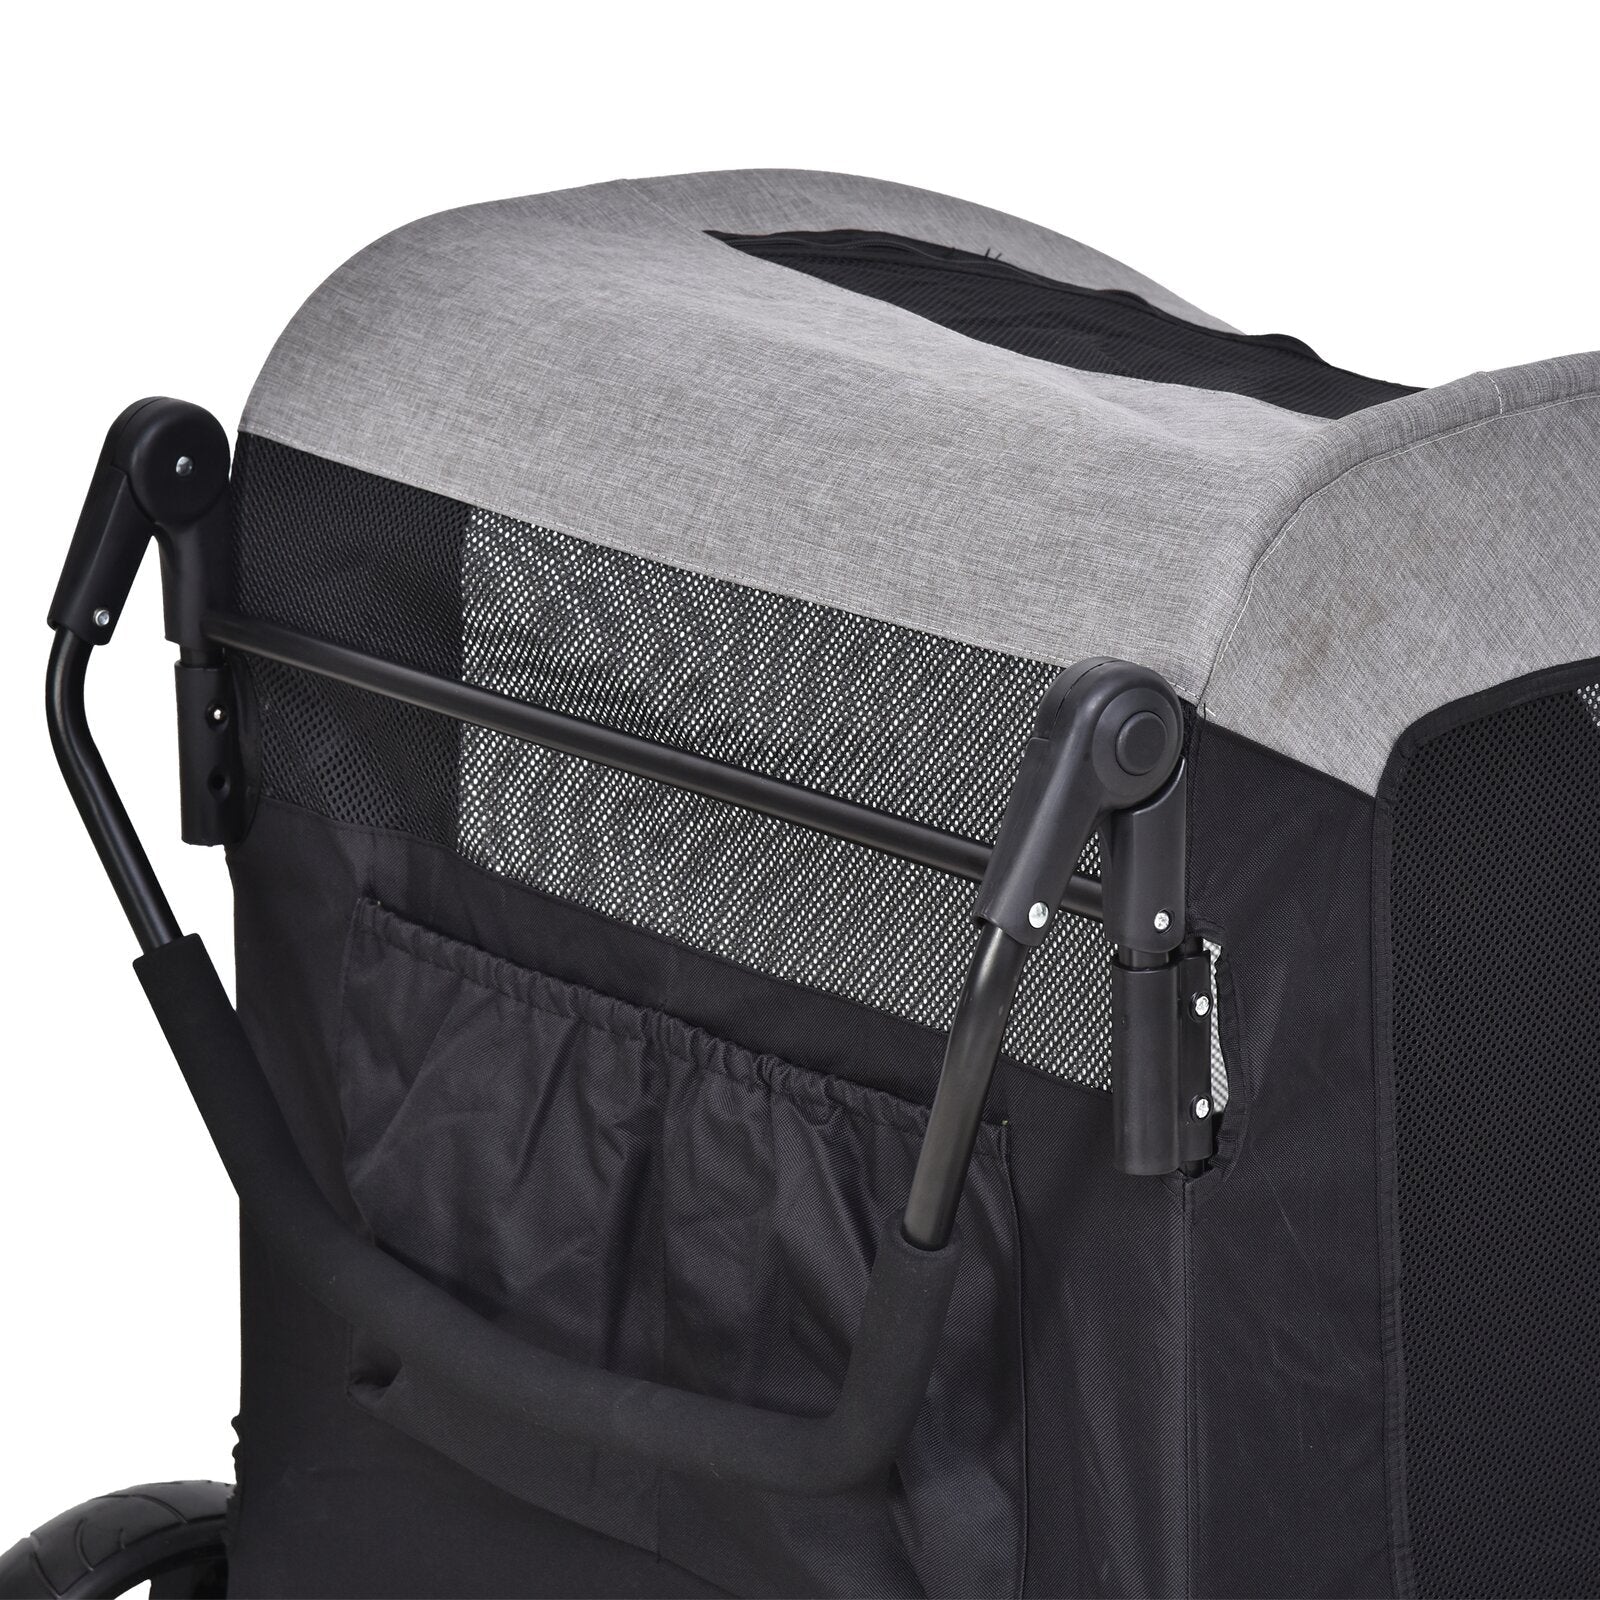 Folding Standard Stroller with Detachable Carrier | Fashionsarah.com